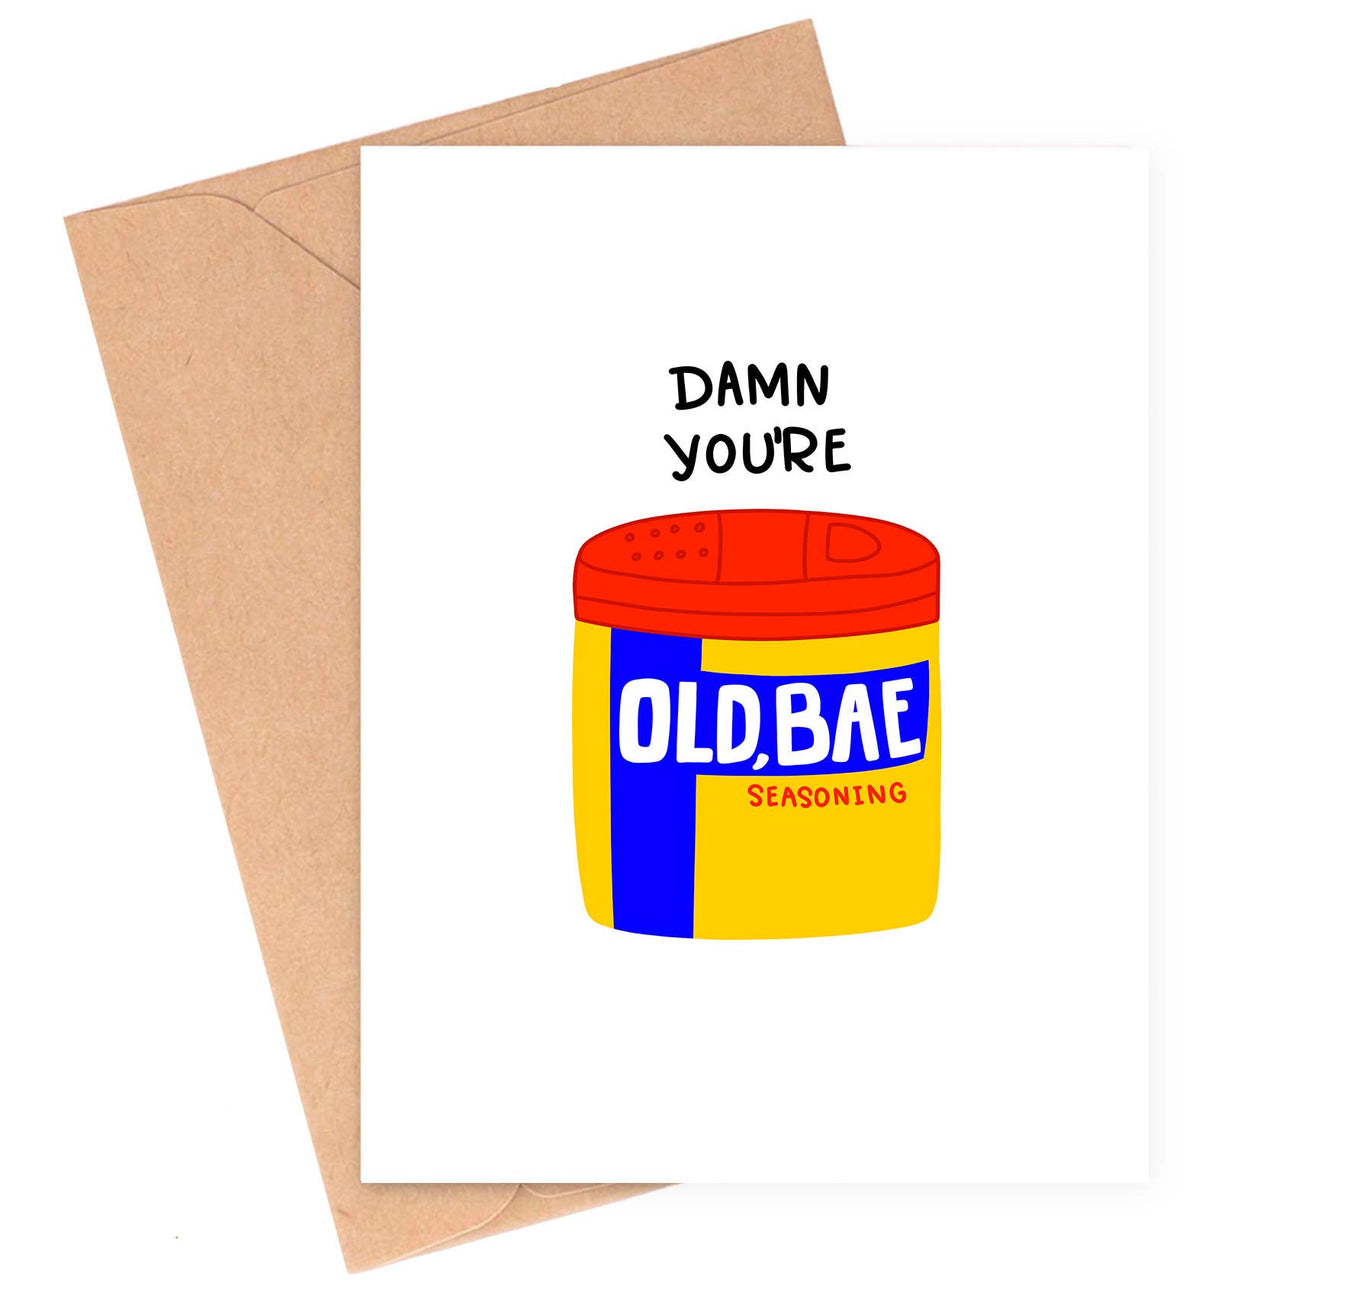 Greeting Cards - Birthday